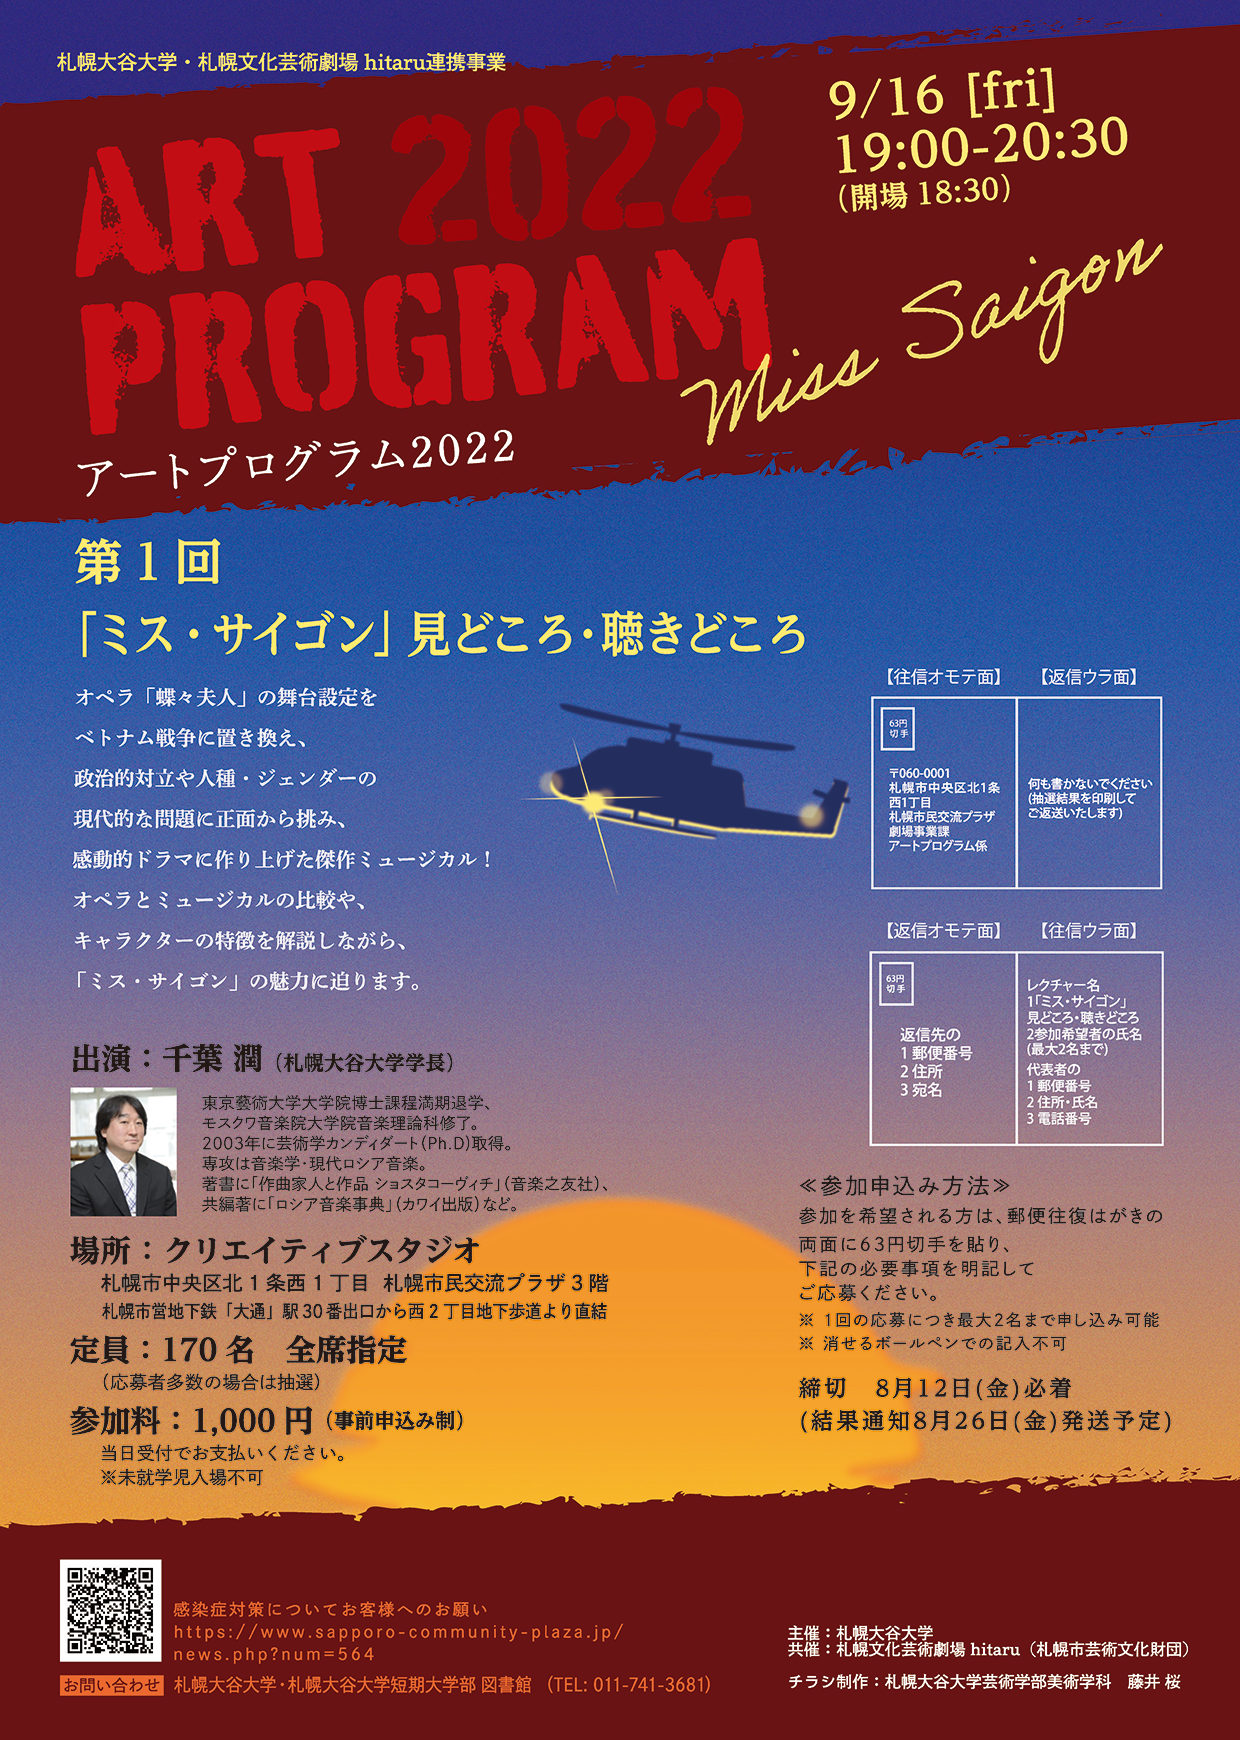 Sapporo Otani University & hitaru Joint ProjectArt Program 2022Music and Performance Highlights from the musical “Miss Saigon”  image